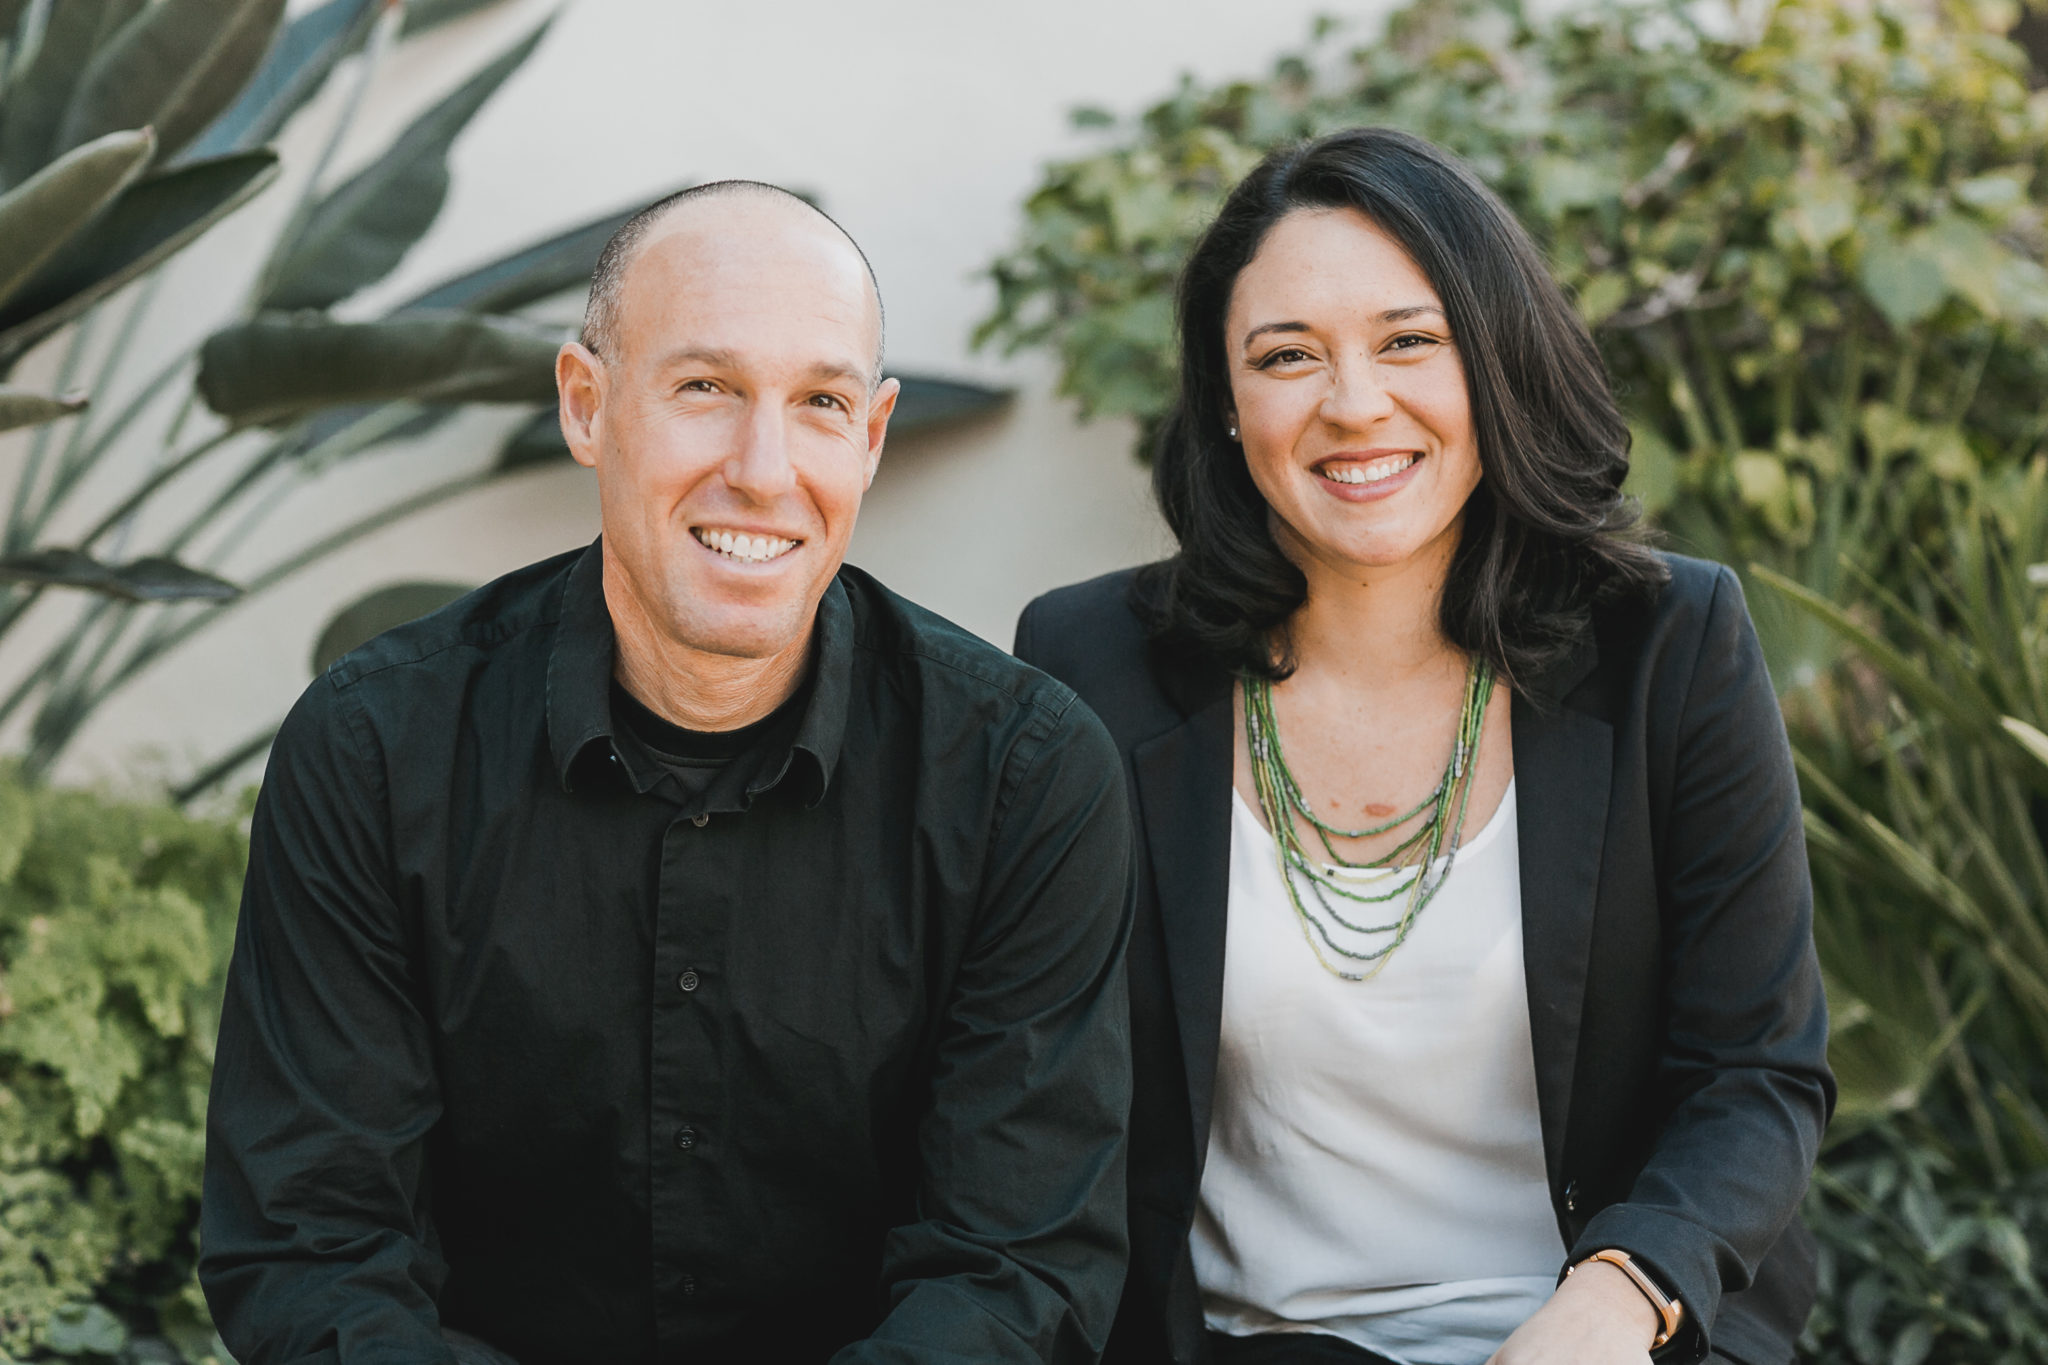 Mission Driven Finance co-founders Lauren Grattan and David Lynn